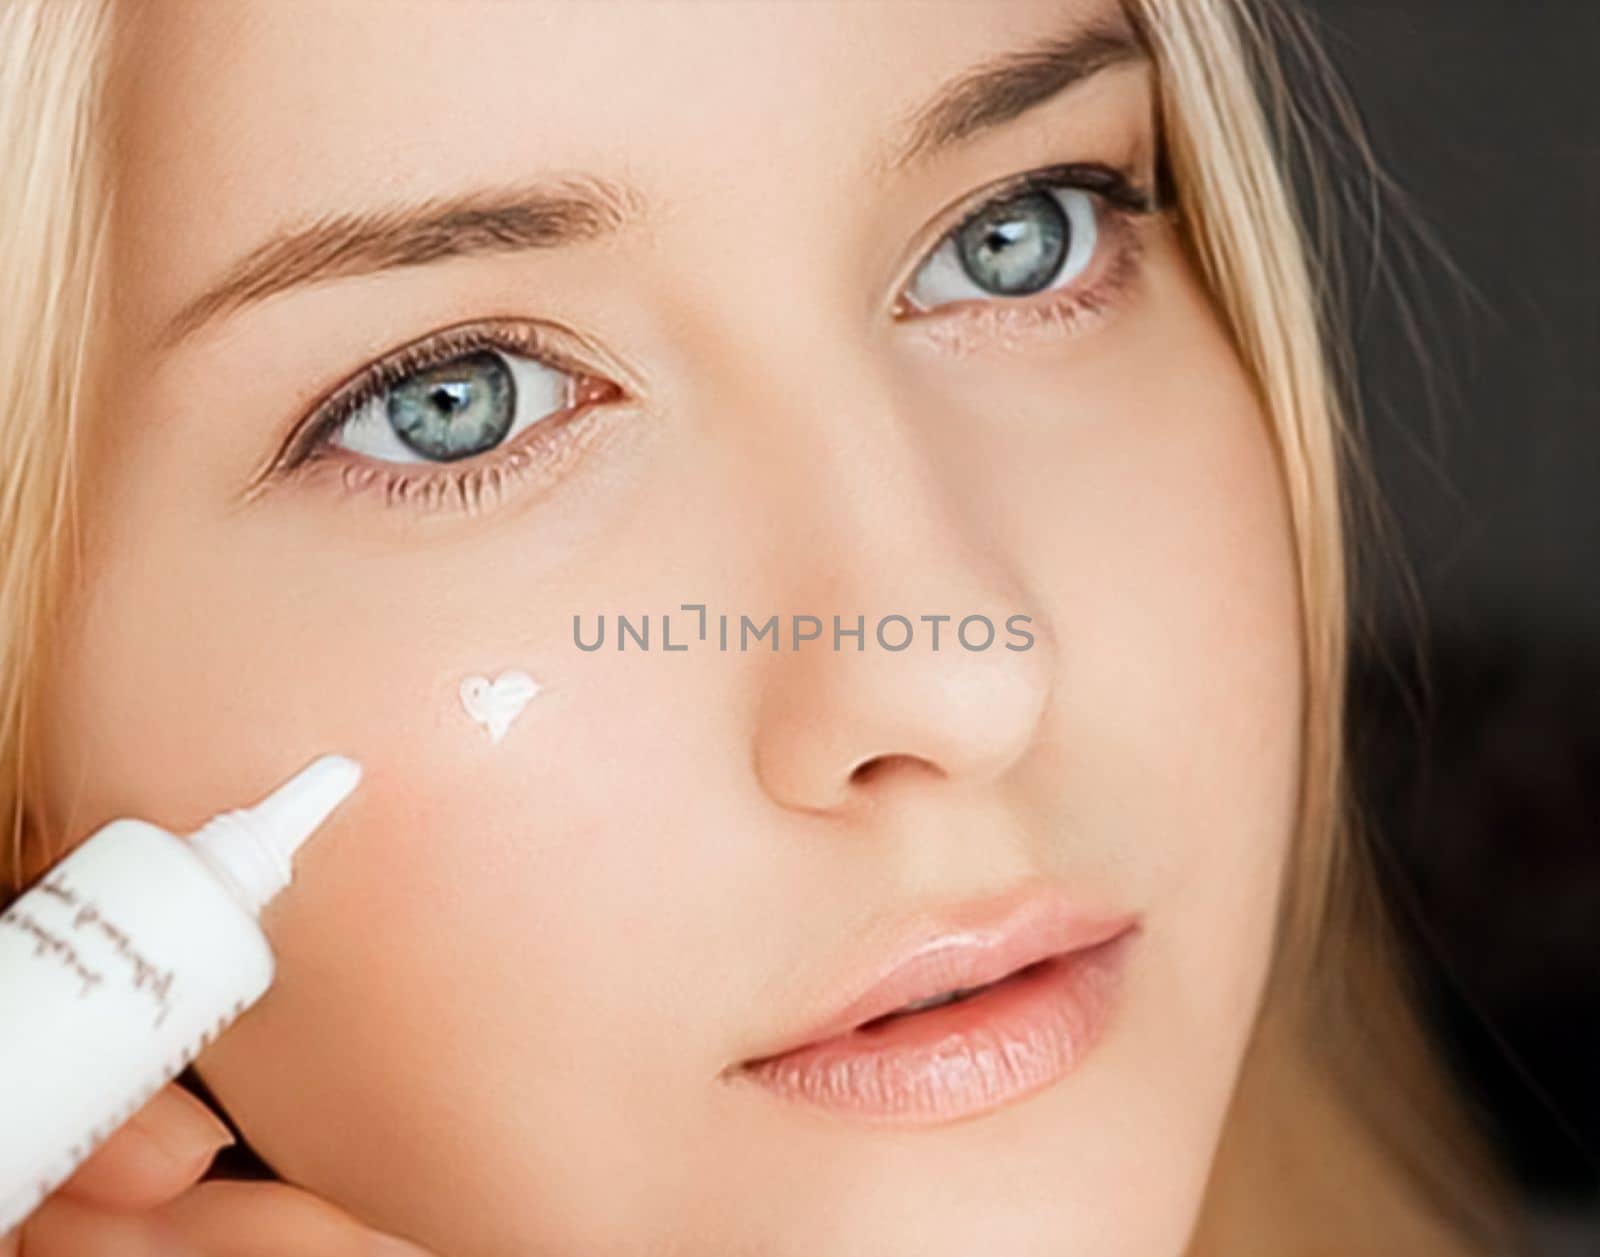 Beautiful woman applying skincare cream on her face.